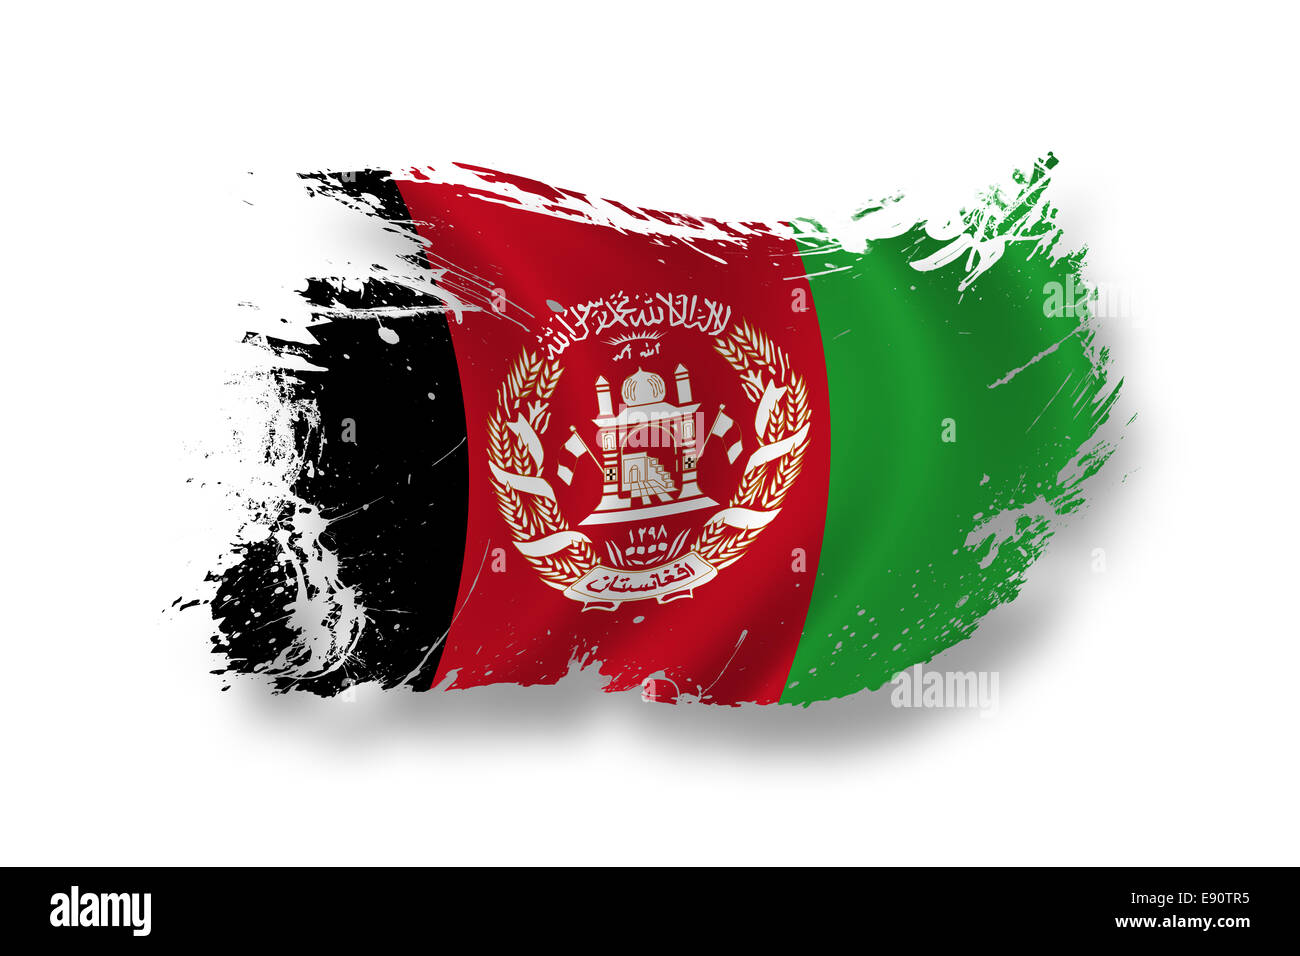 HD wallpaper international flag afghanistan red patriotism textile   Wallpaper Flare